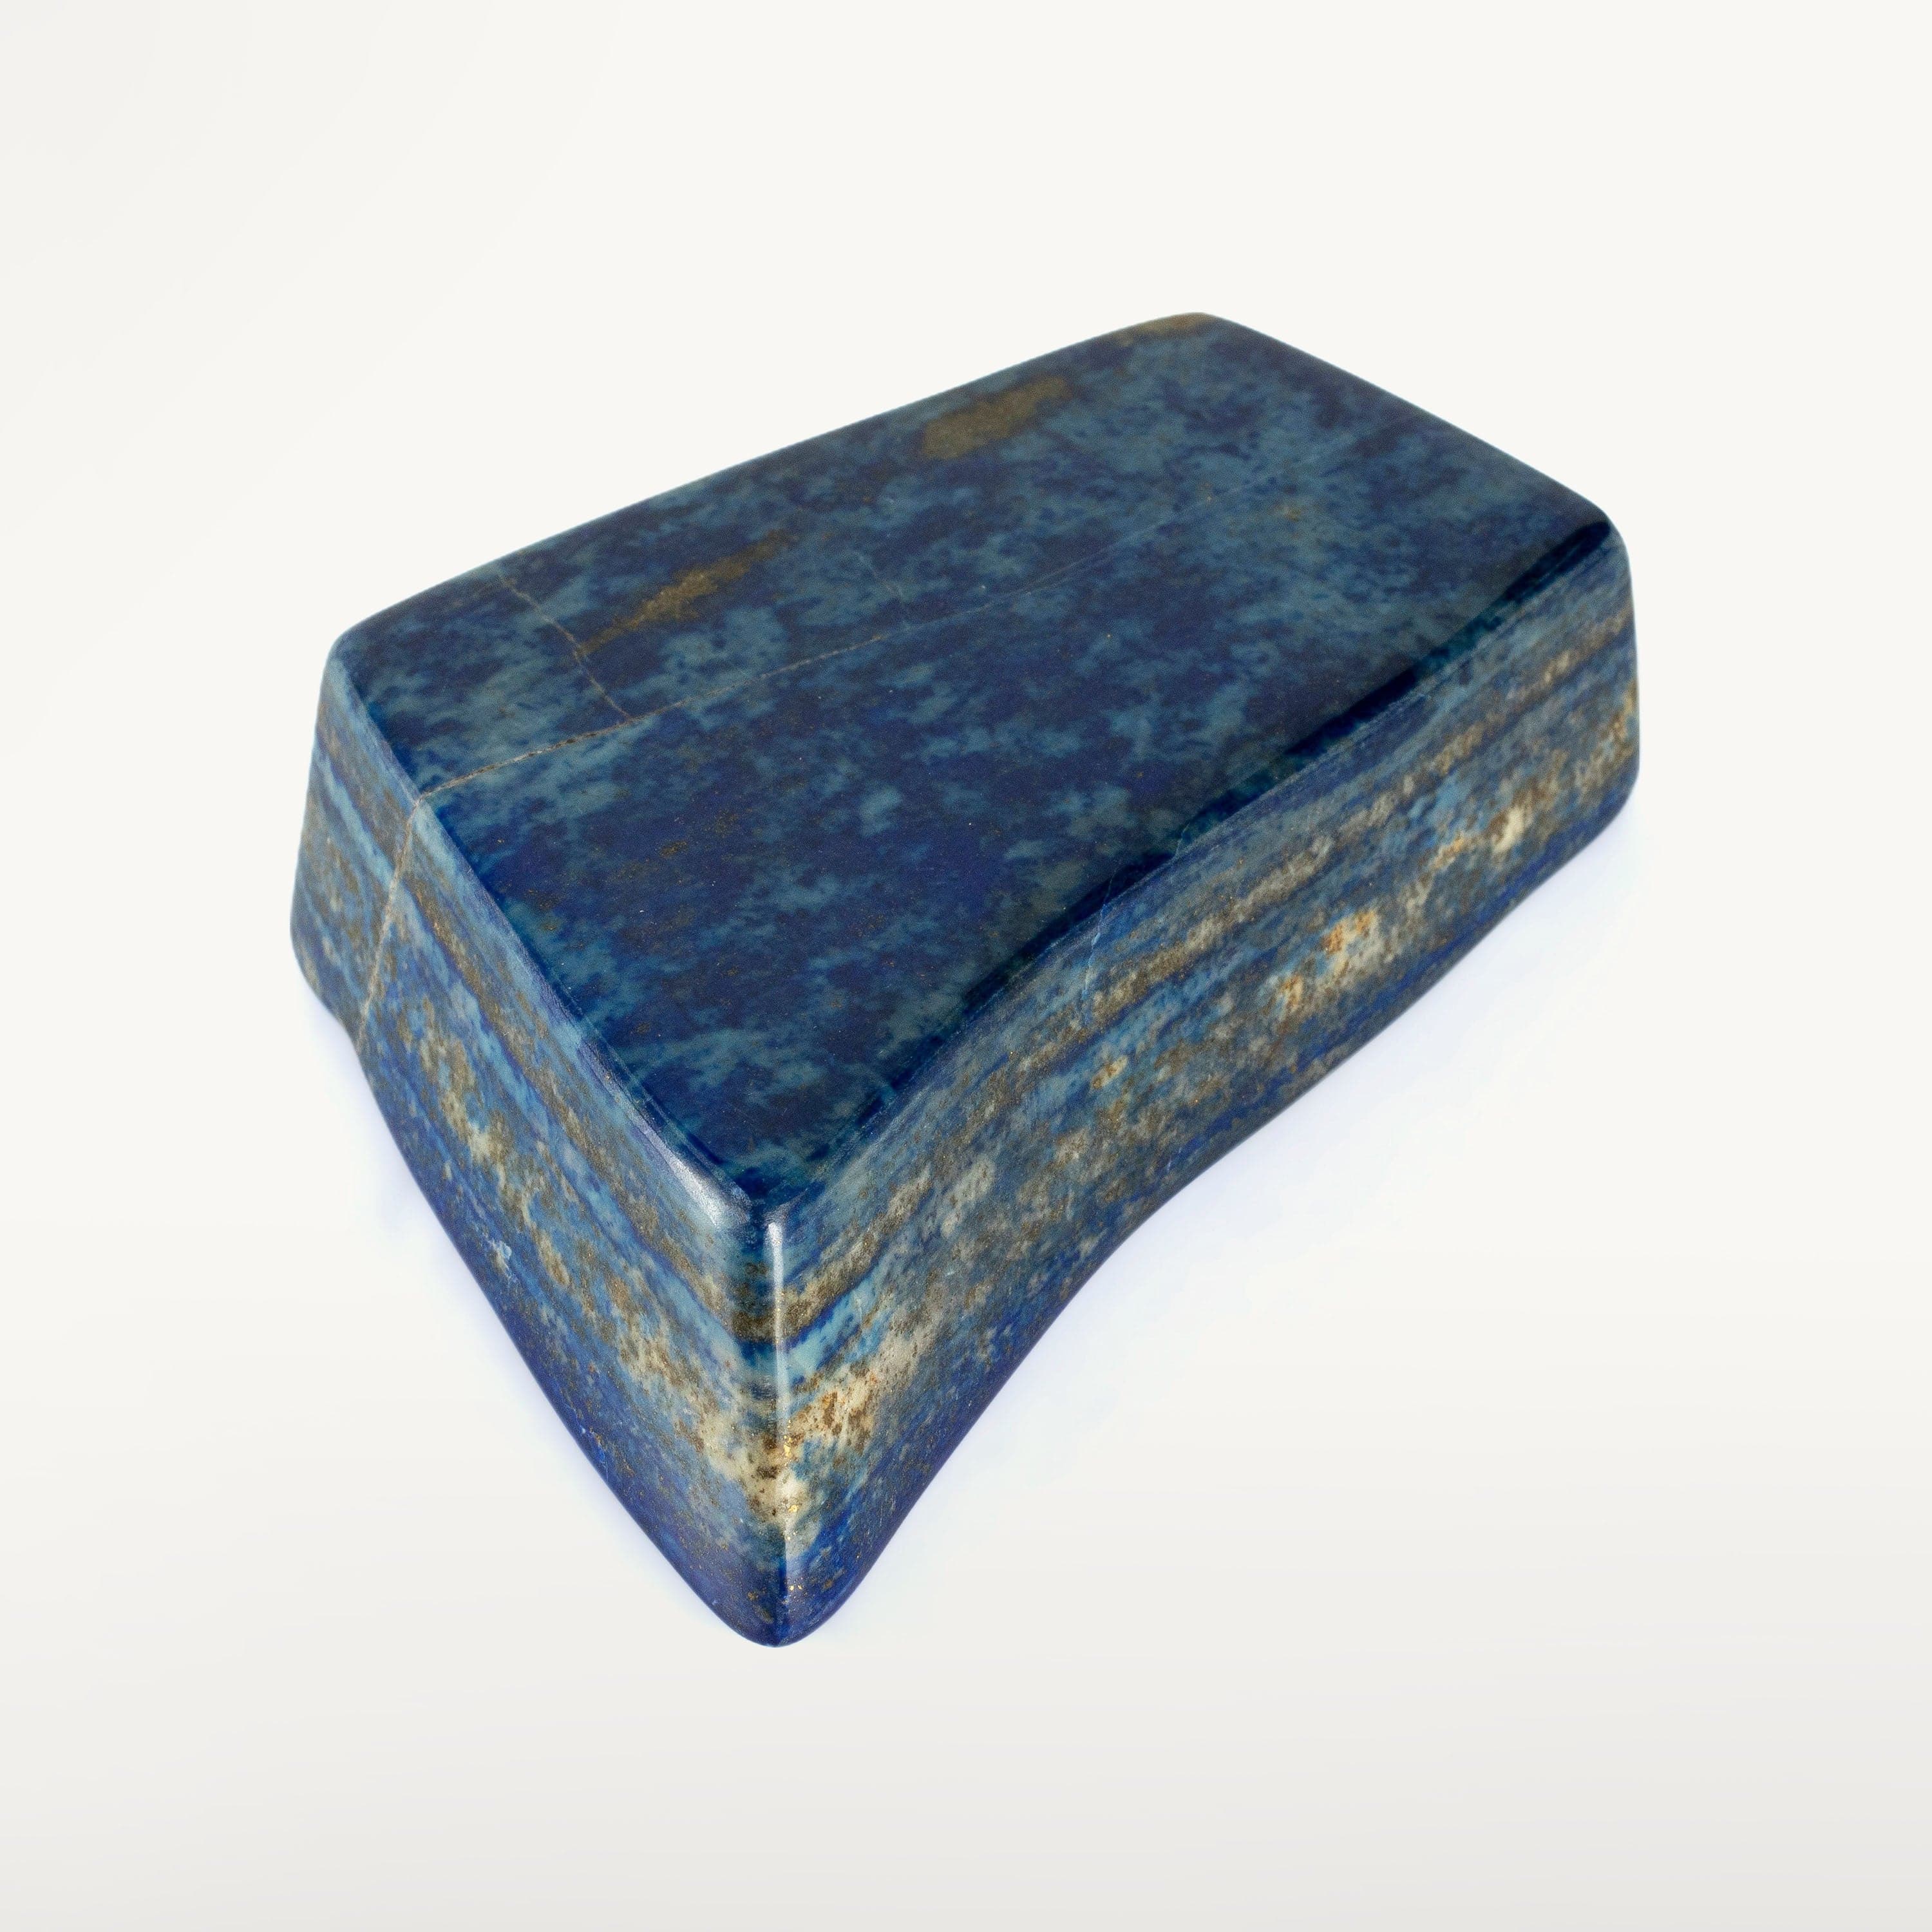 Kalifano Lapis Lapis Lazuli Freeform from Afghanistan - 5" / 919 grams LP950.003